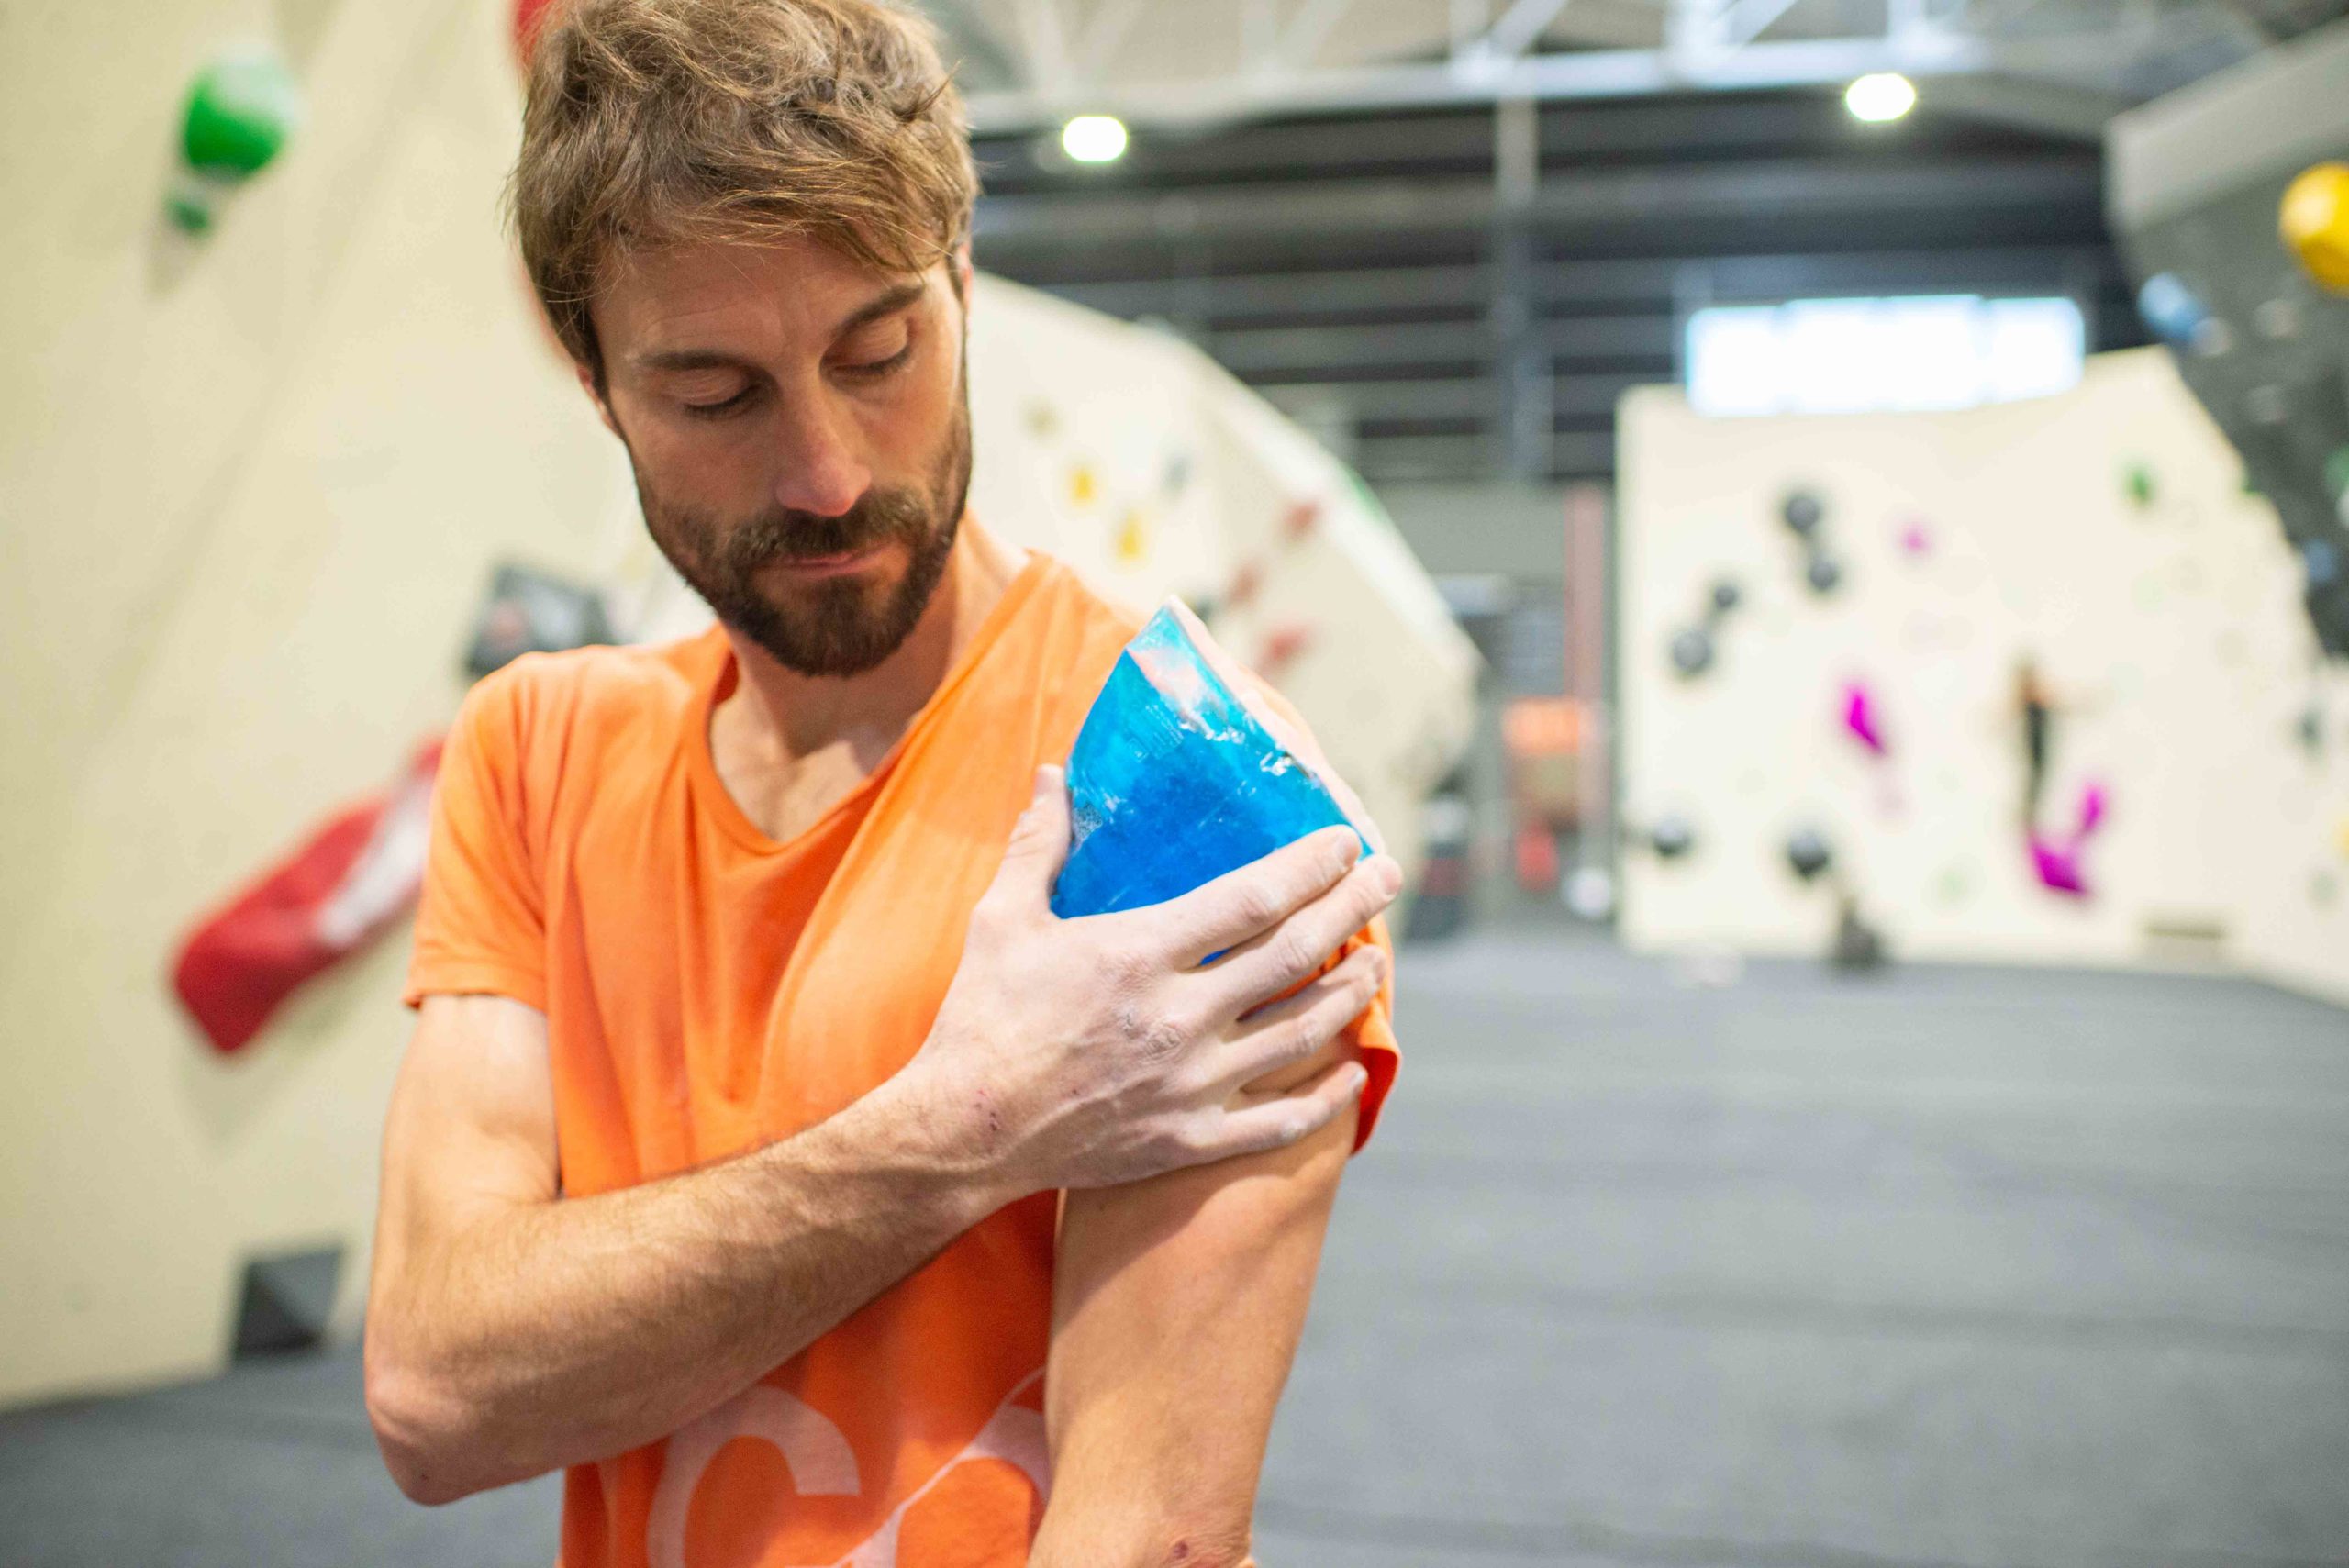 Fisioterapia salud Sputnik climbing como tratar lesiones frío o calor